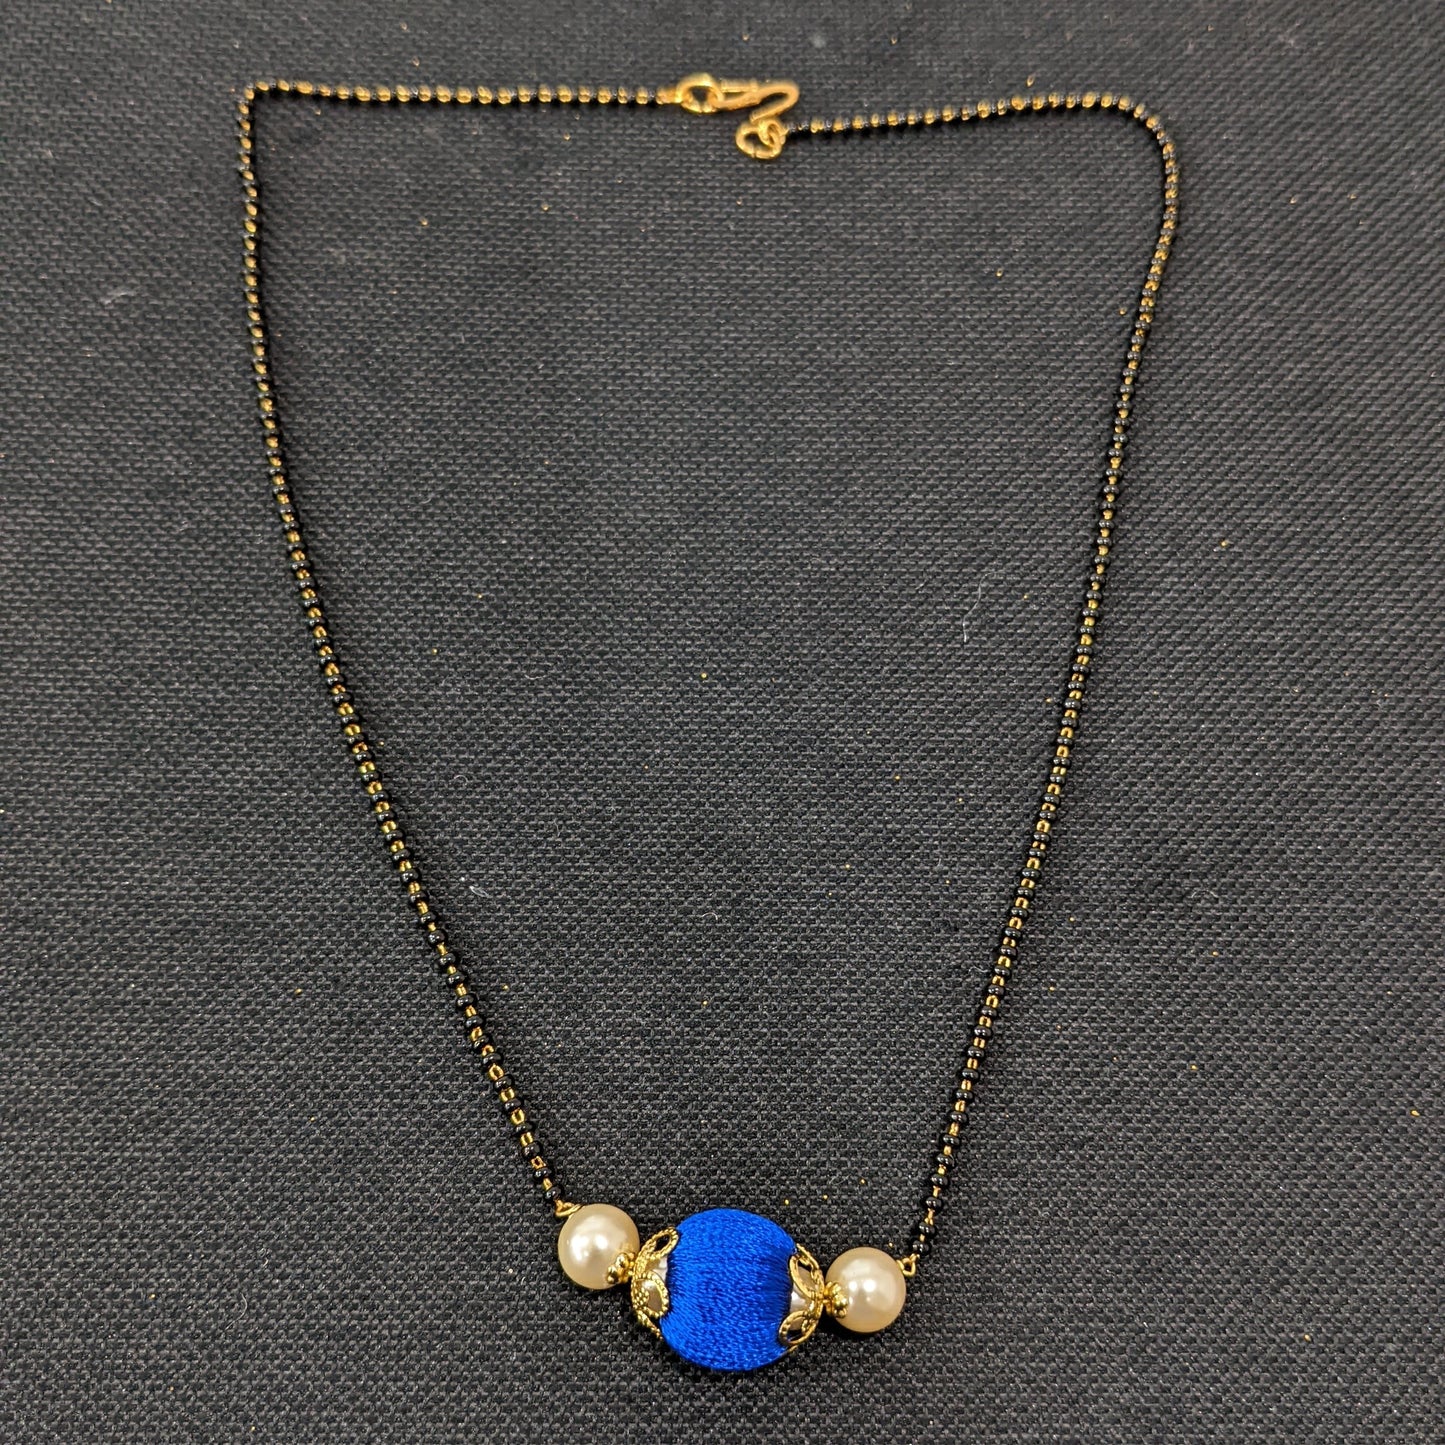 Mangalsutra - Silk thread ball Pendant Necklace - Single strand